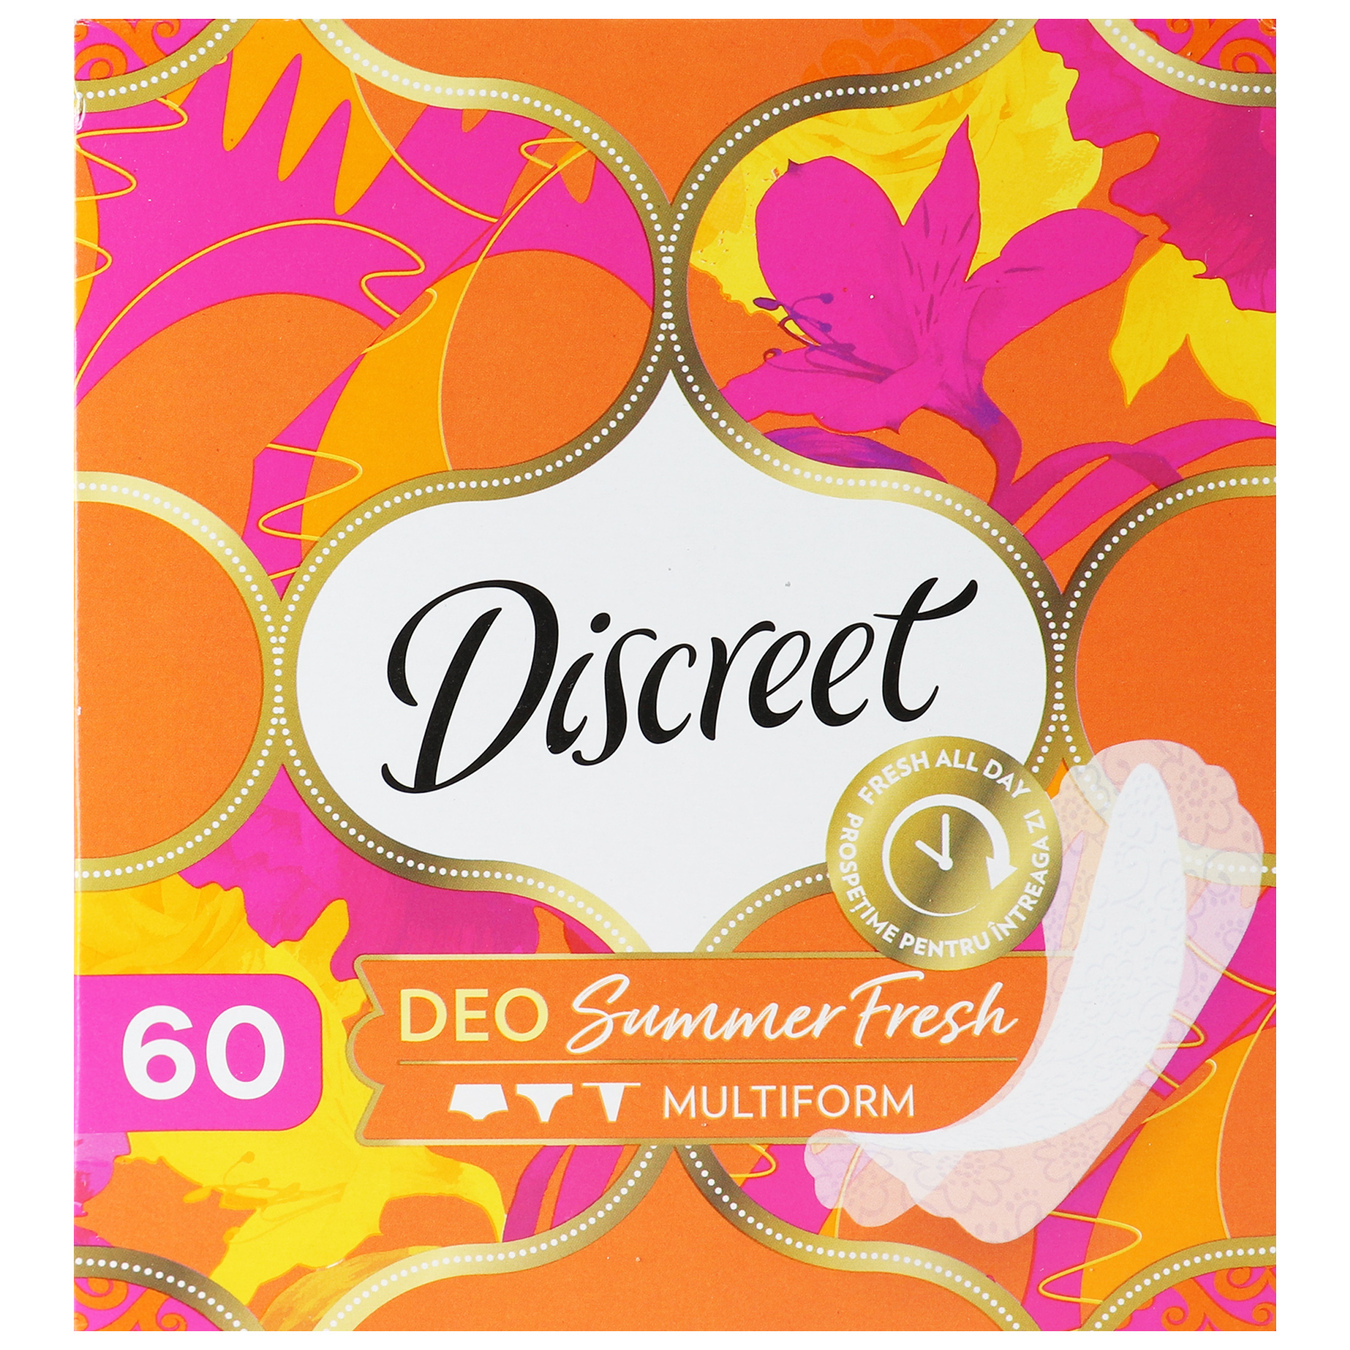 Daily pads Discreet Multiform Deo Summer Fresh Trio 60 pcs